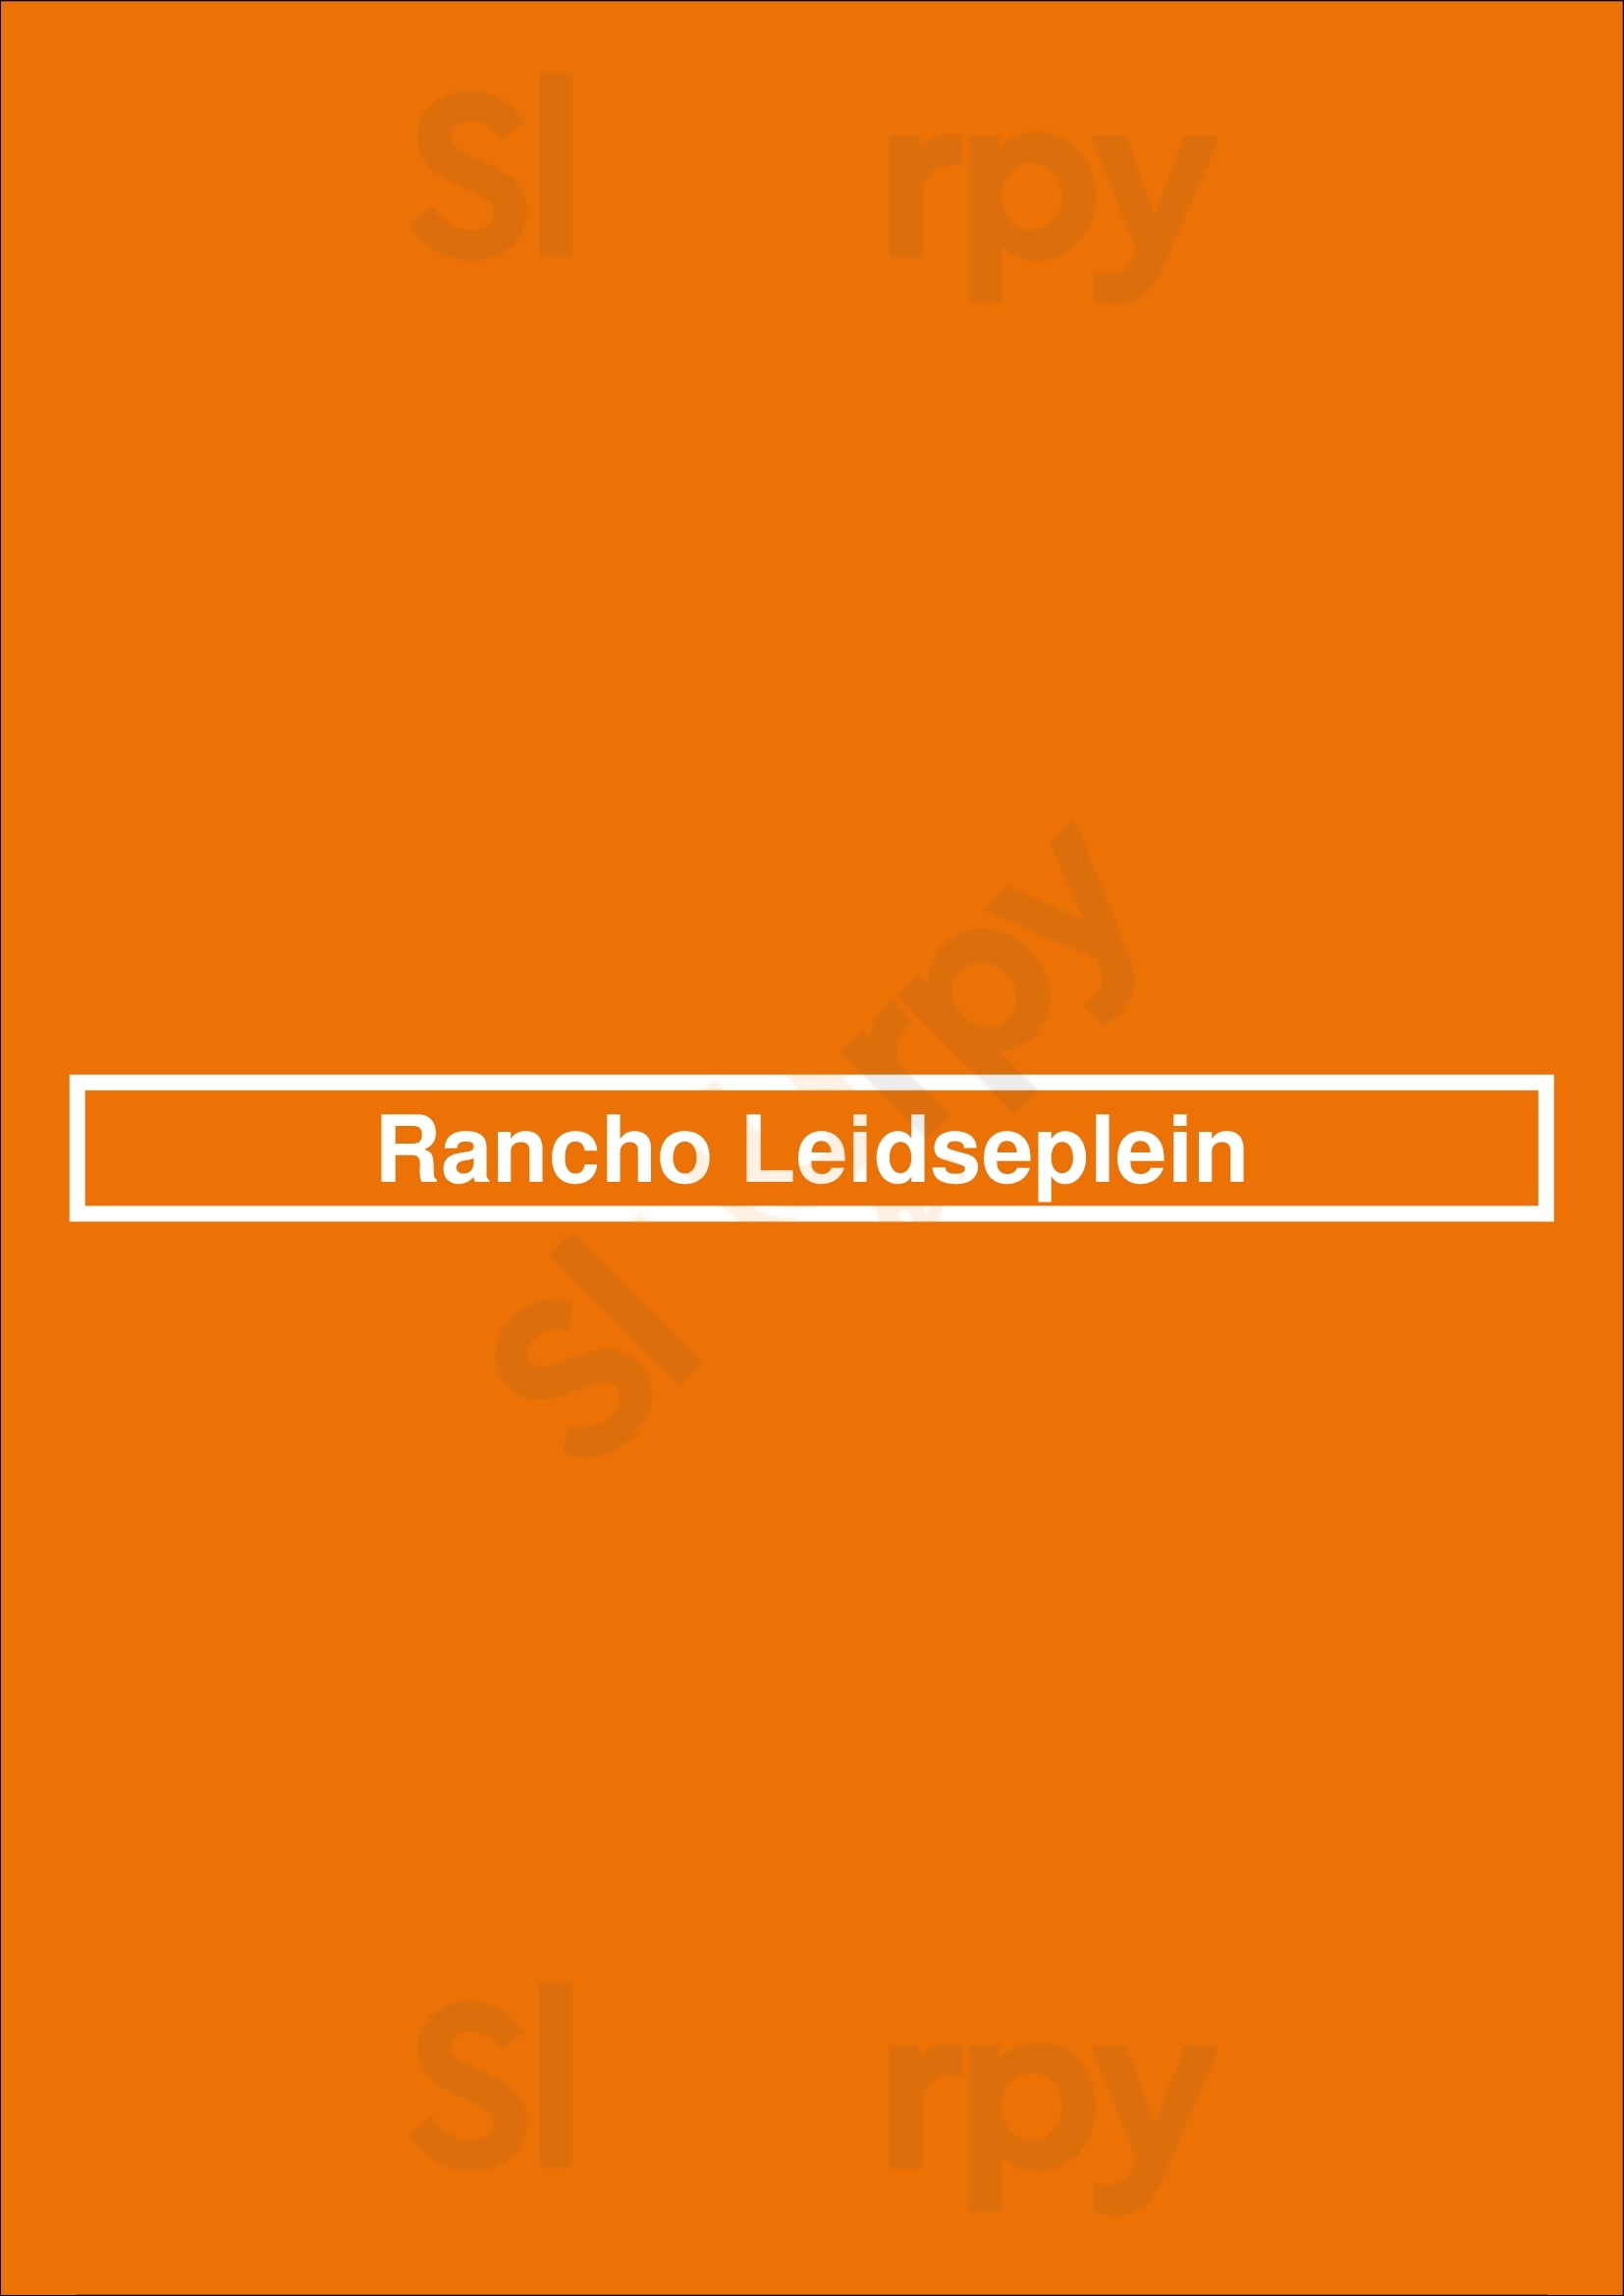 Rancho Leidseplein Amsterdam Menu - 1